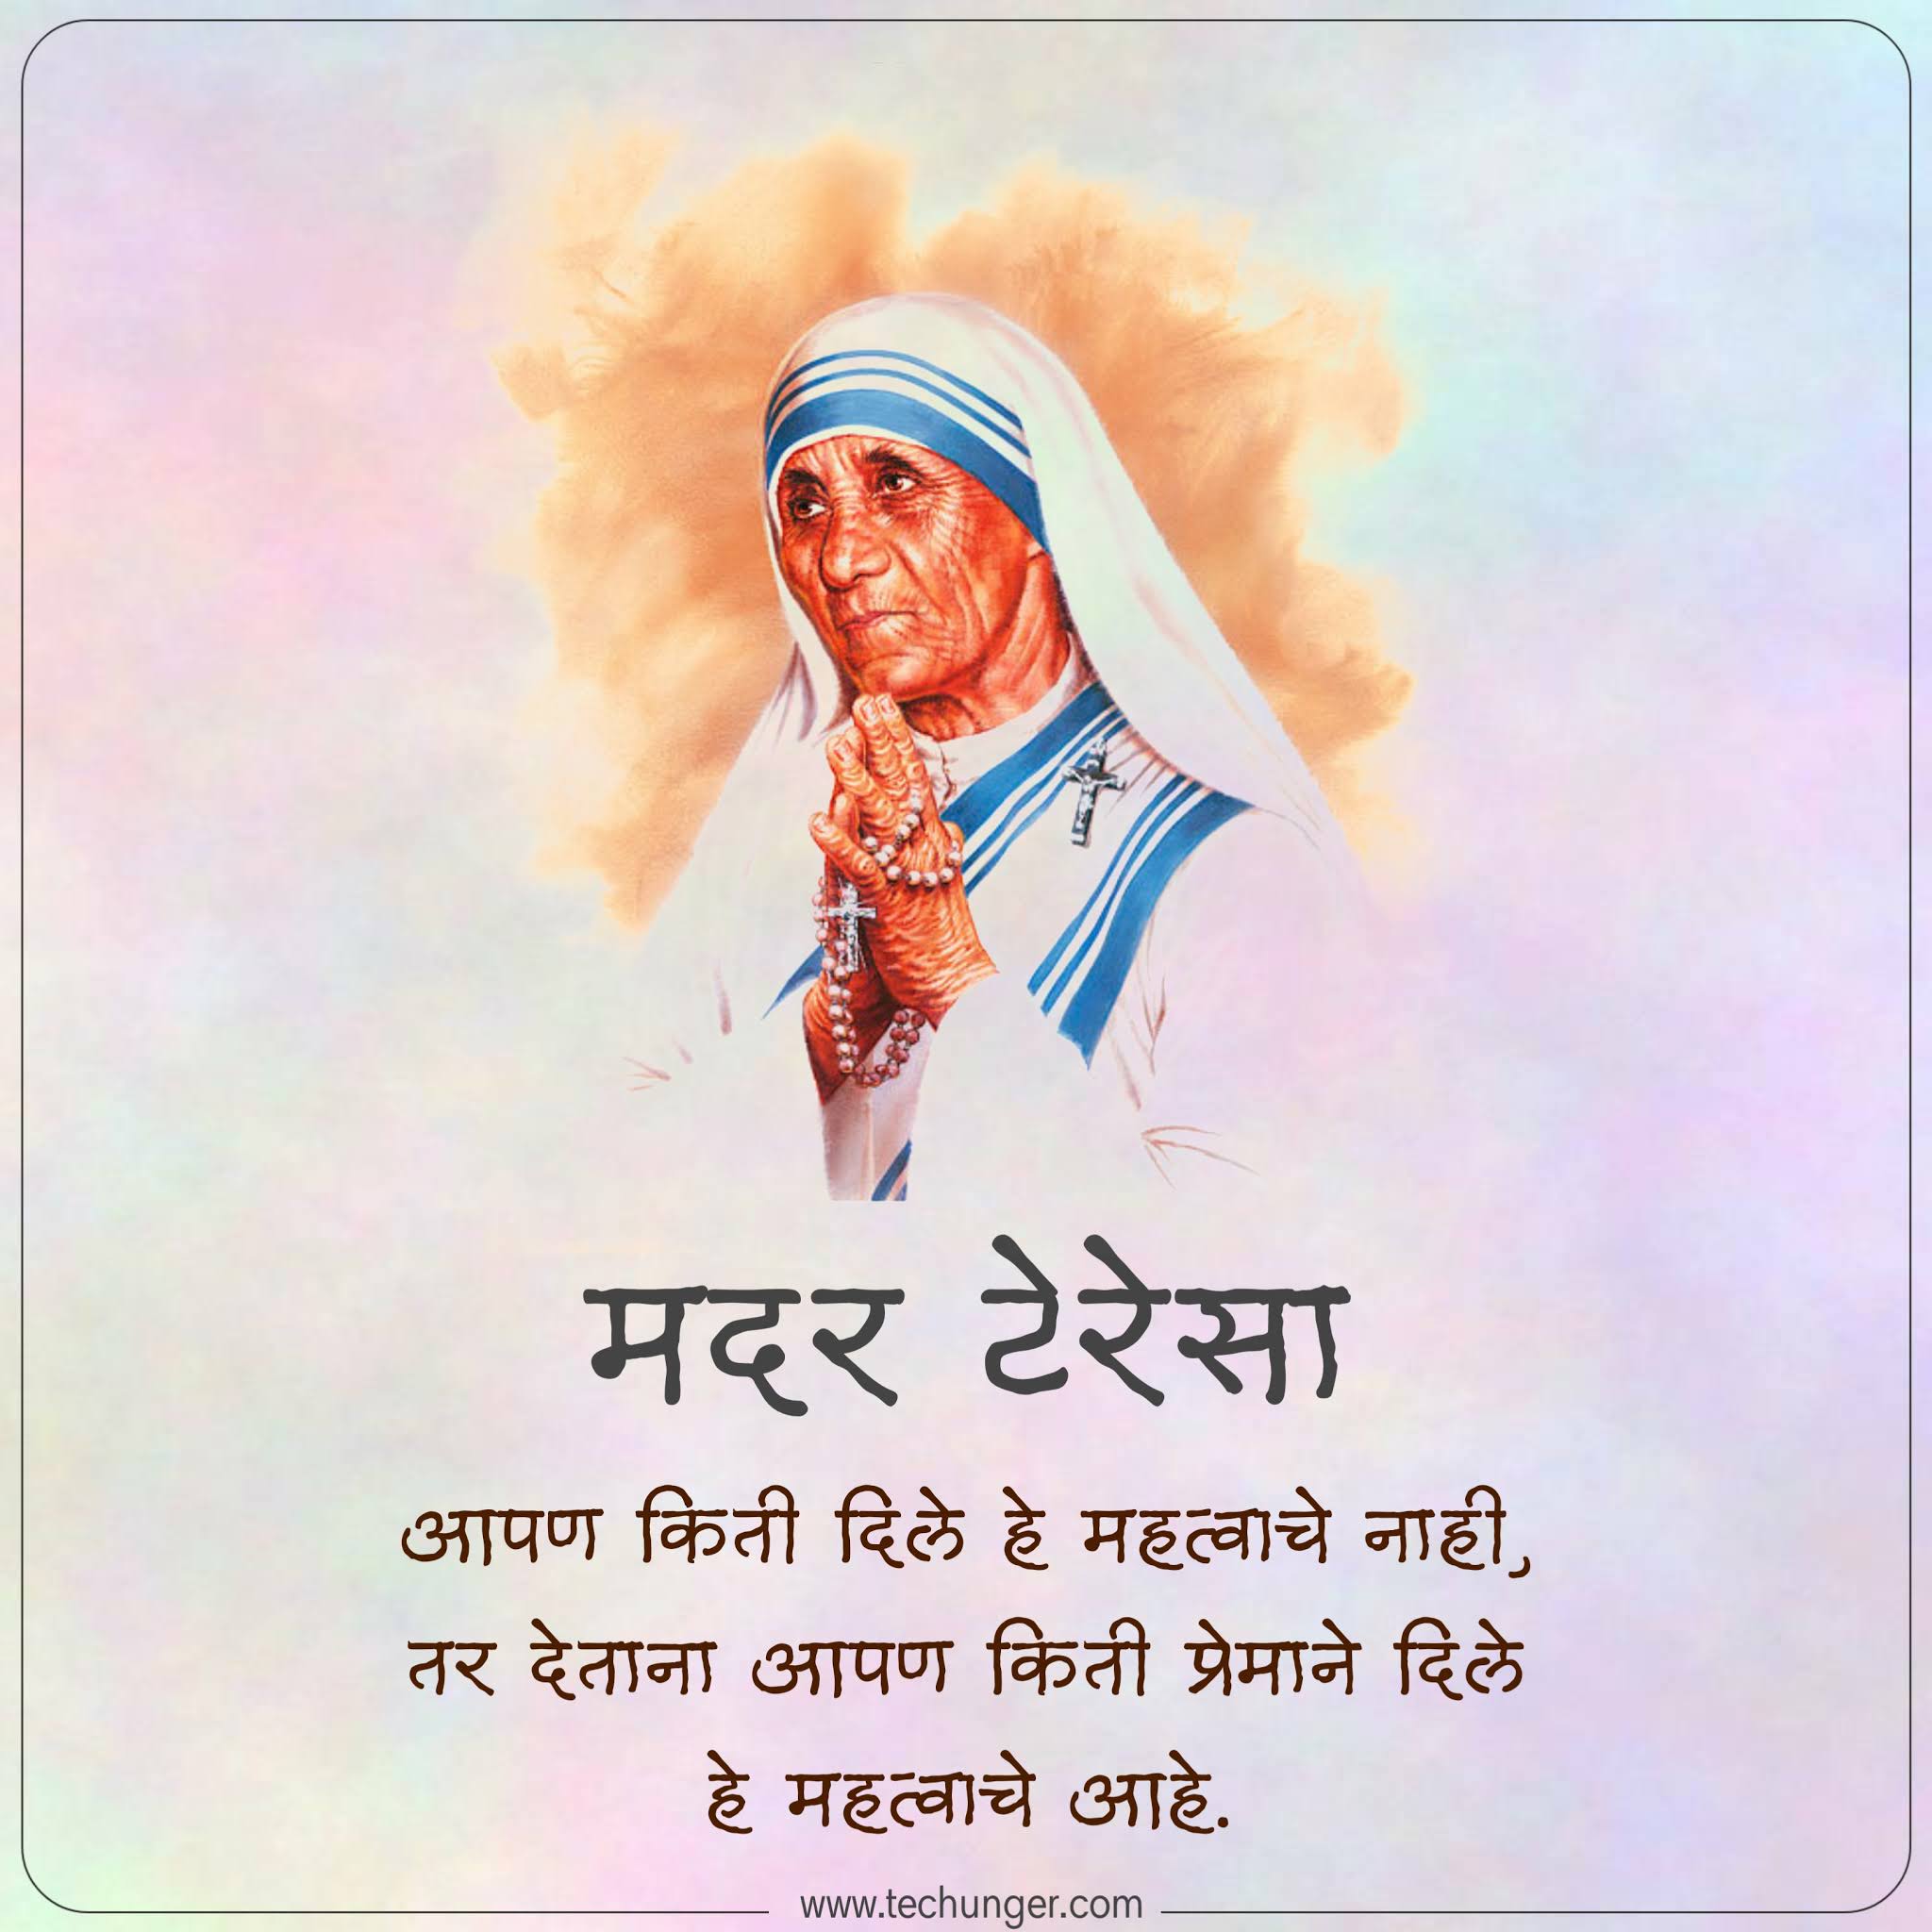 Mother Teresa, मदर टेरेसा, Saurabh Chaudhari, techunger